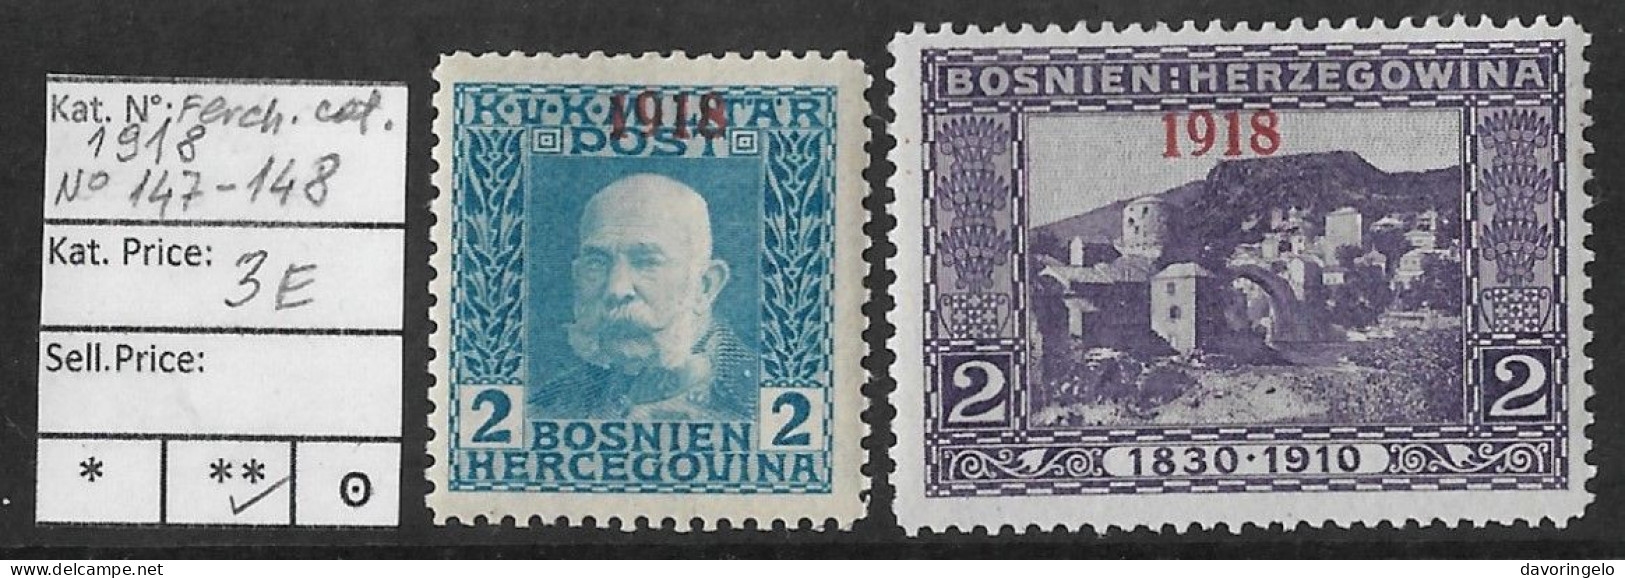 Bosnia-Herzegovina/Austria-Hungary, 1918 Year, SET No 147-148, (**) - Bosnia Herzegovina